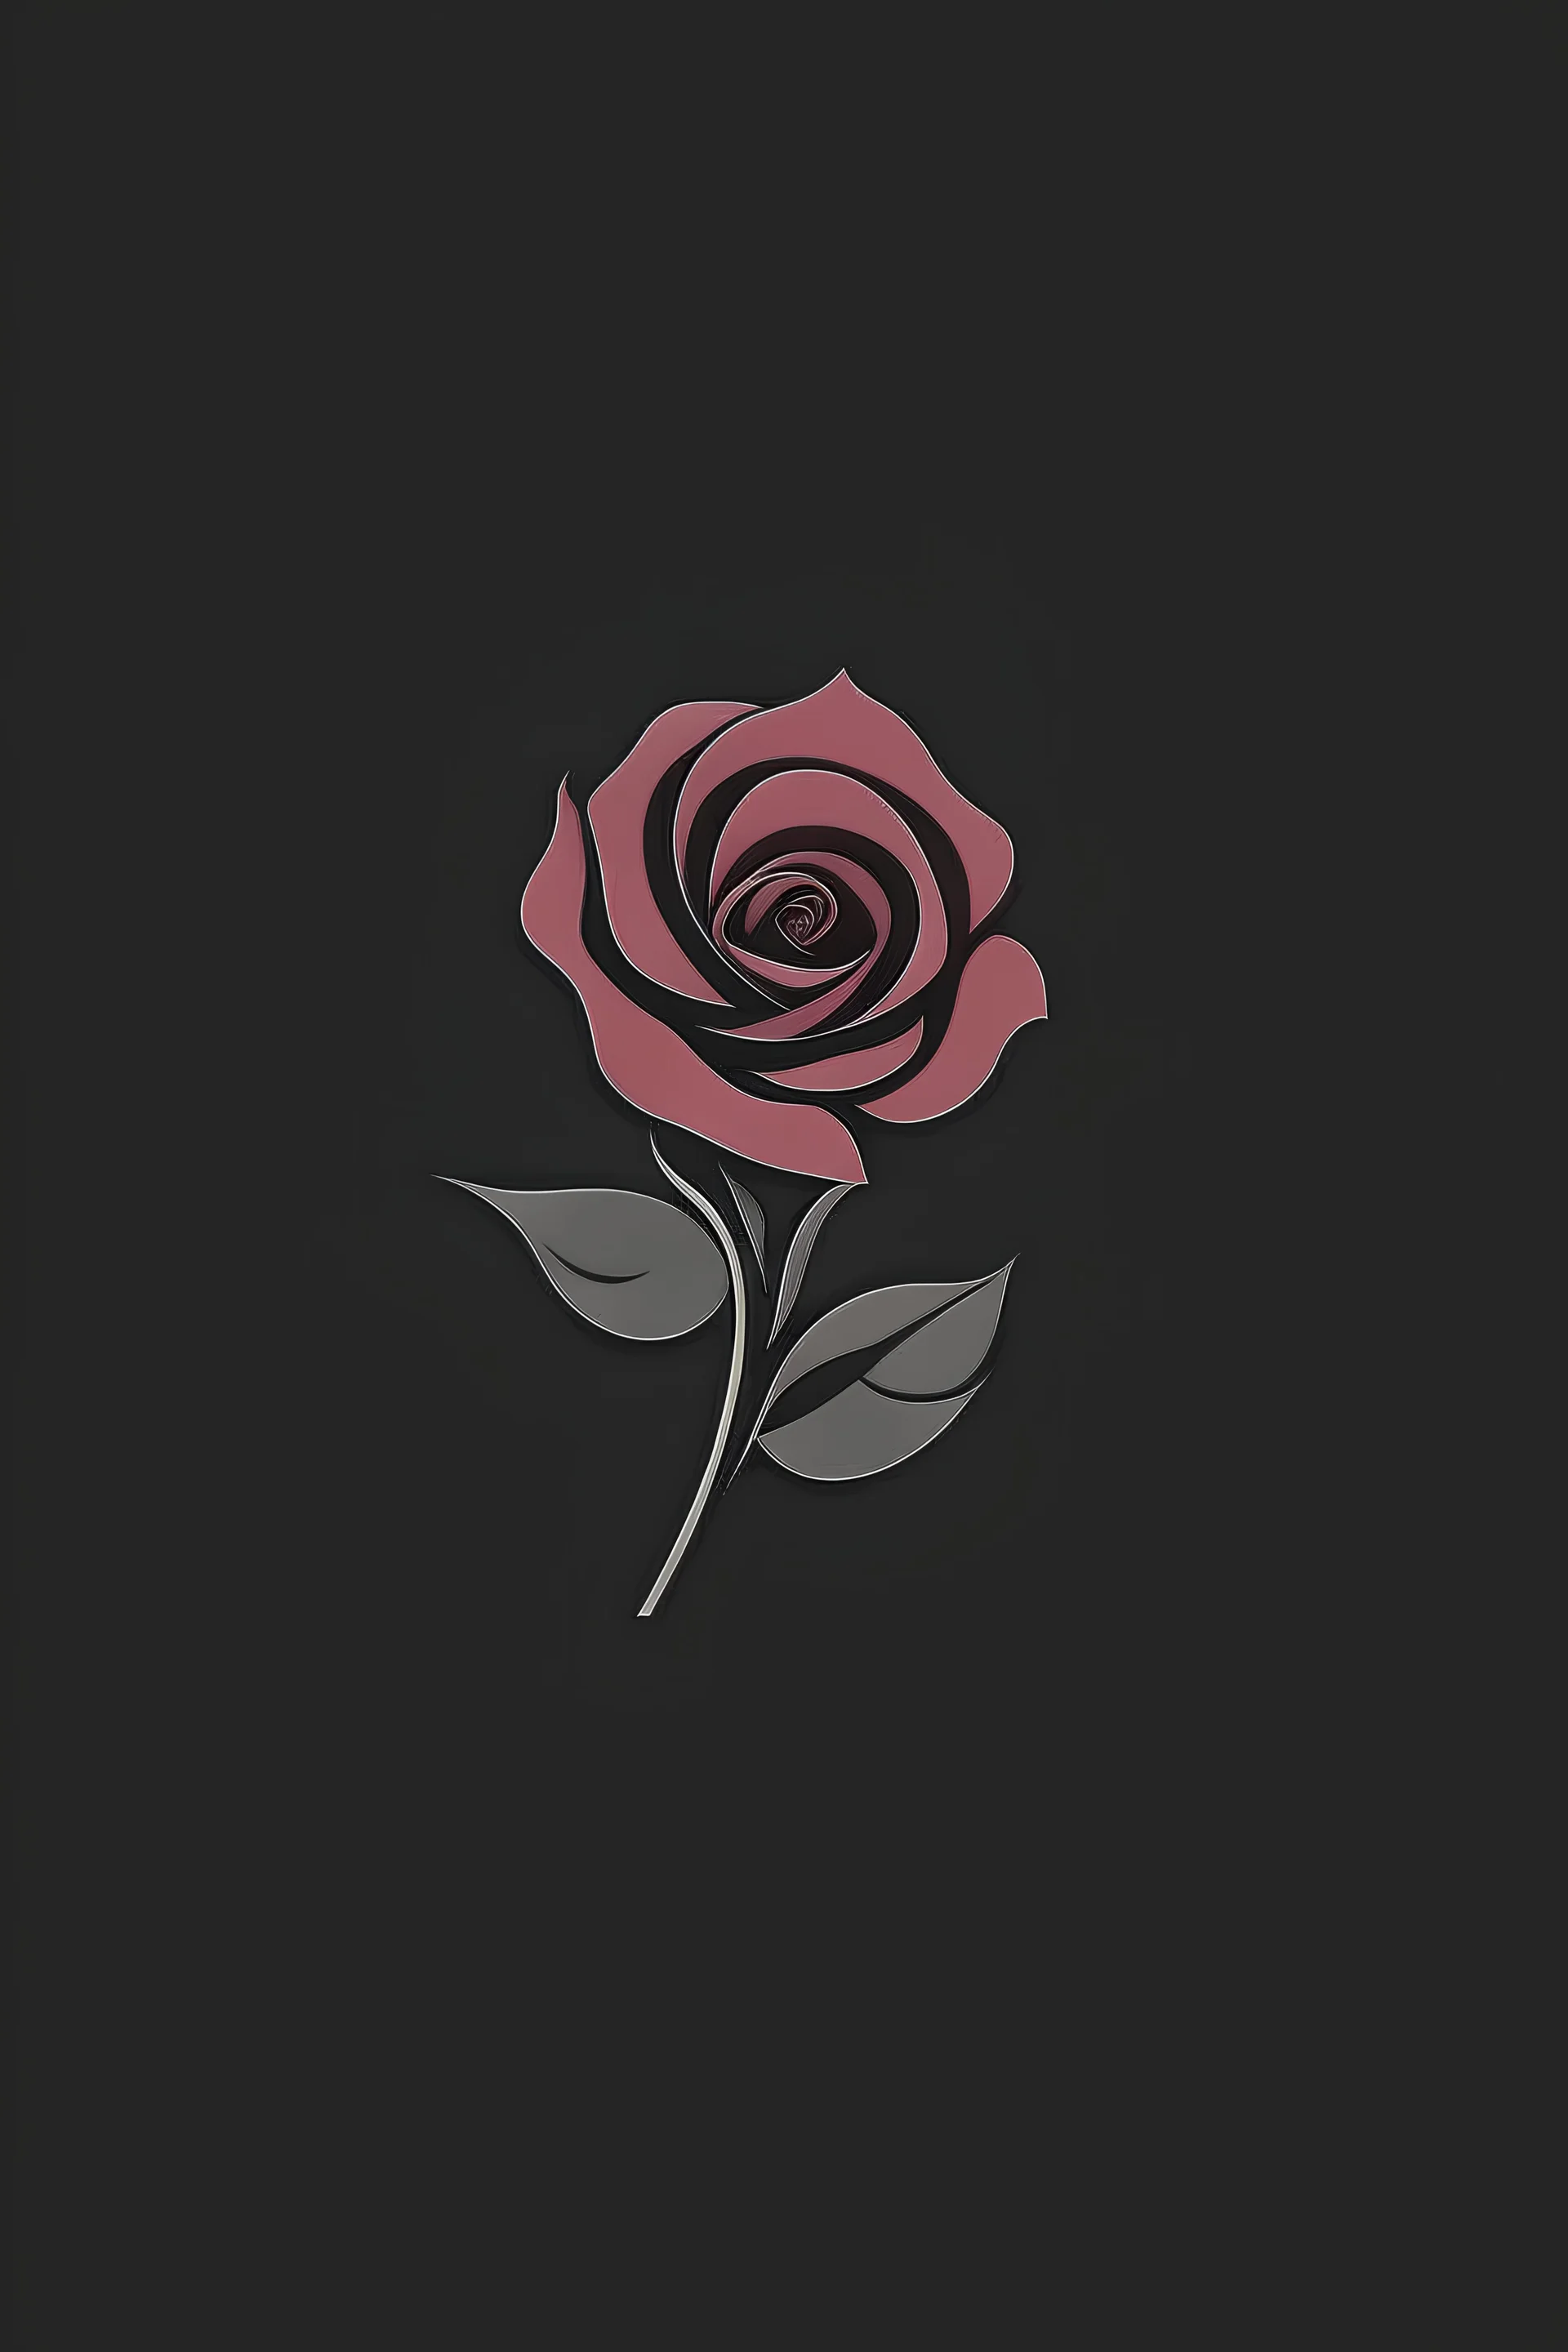 Rose logo flat minimalist design with dark gray background